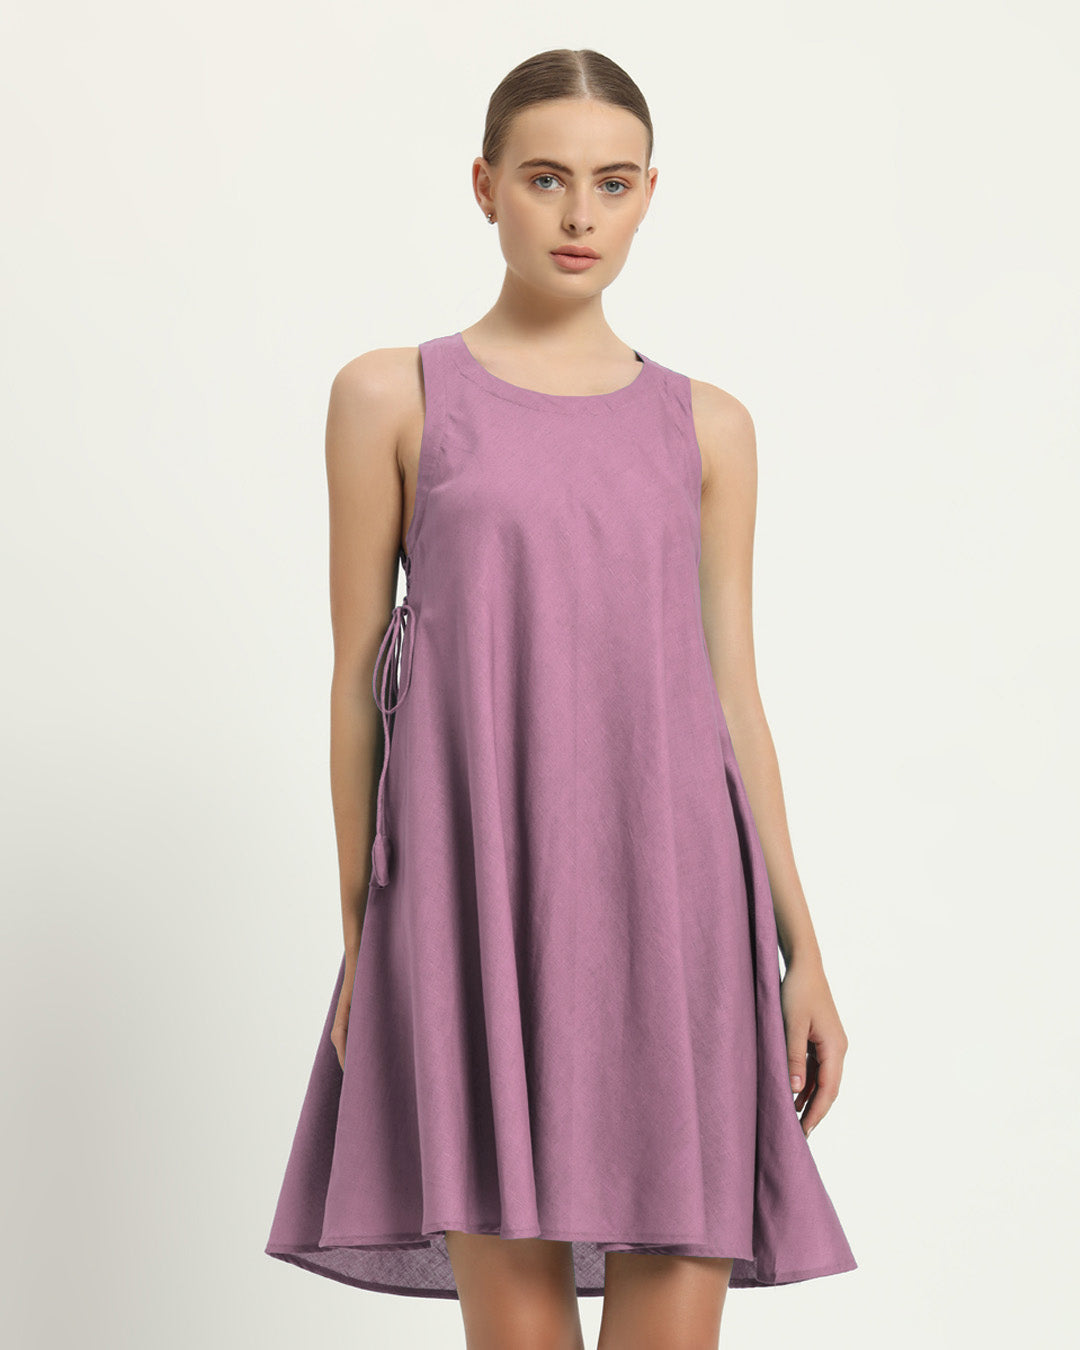 The Rhede Purple Swirl Cotton Dress